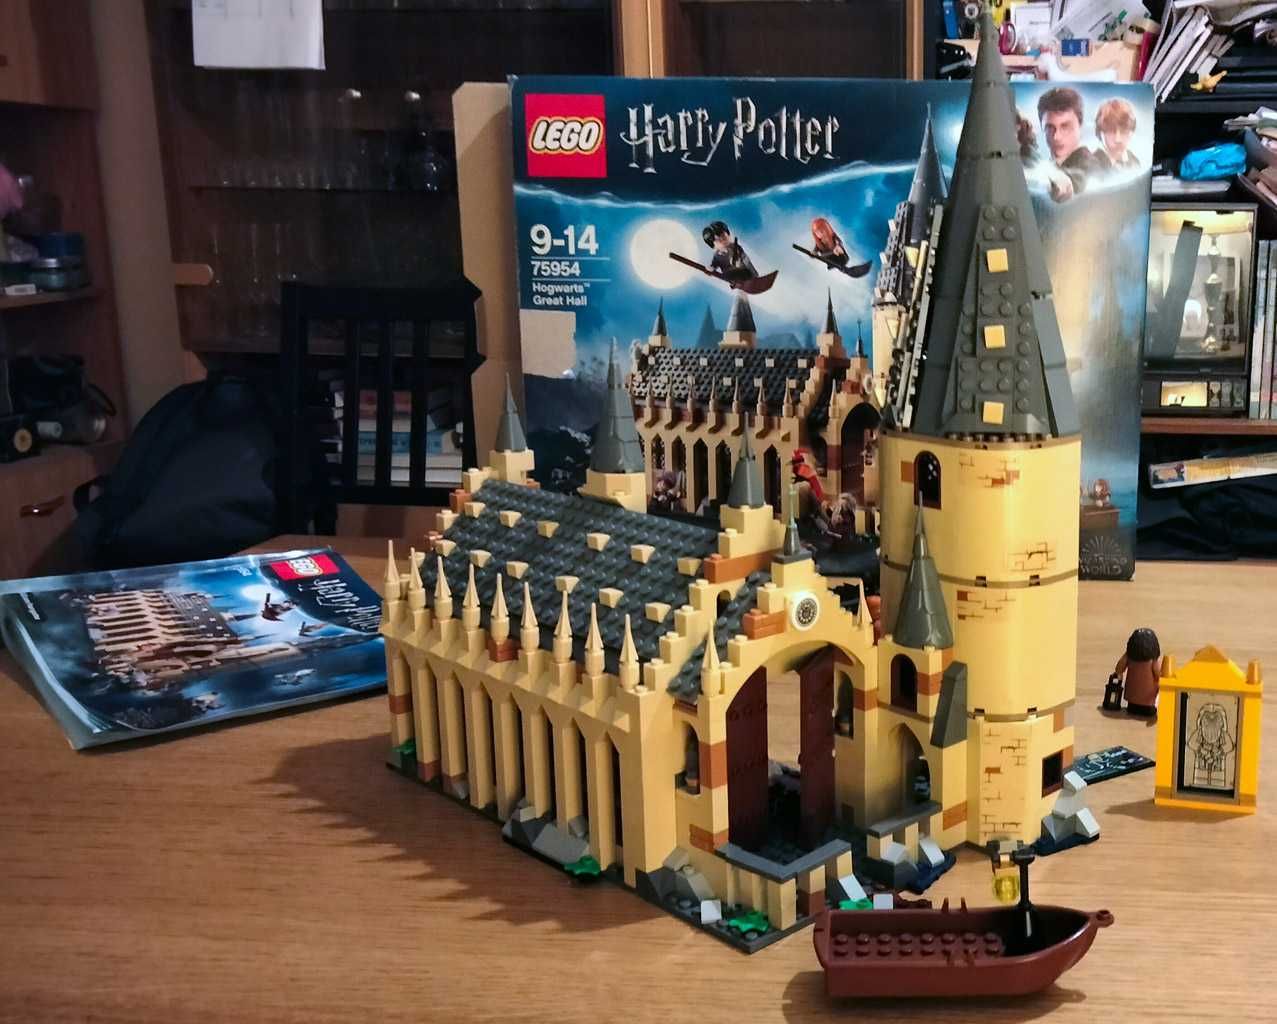 Lego Harry Potter 75954 - Hogwarts Great Hall